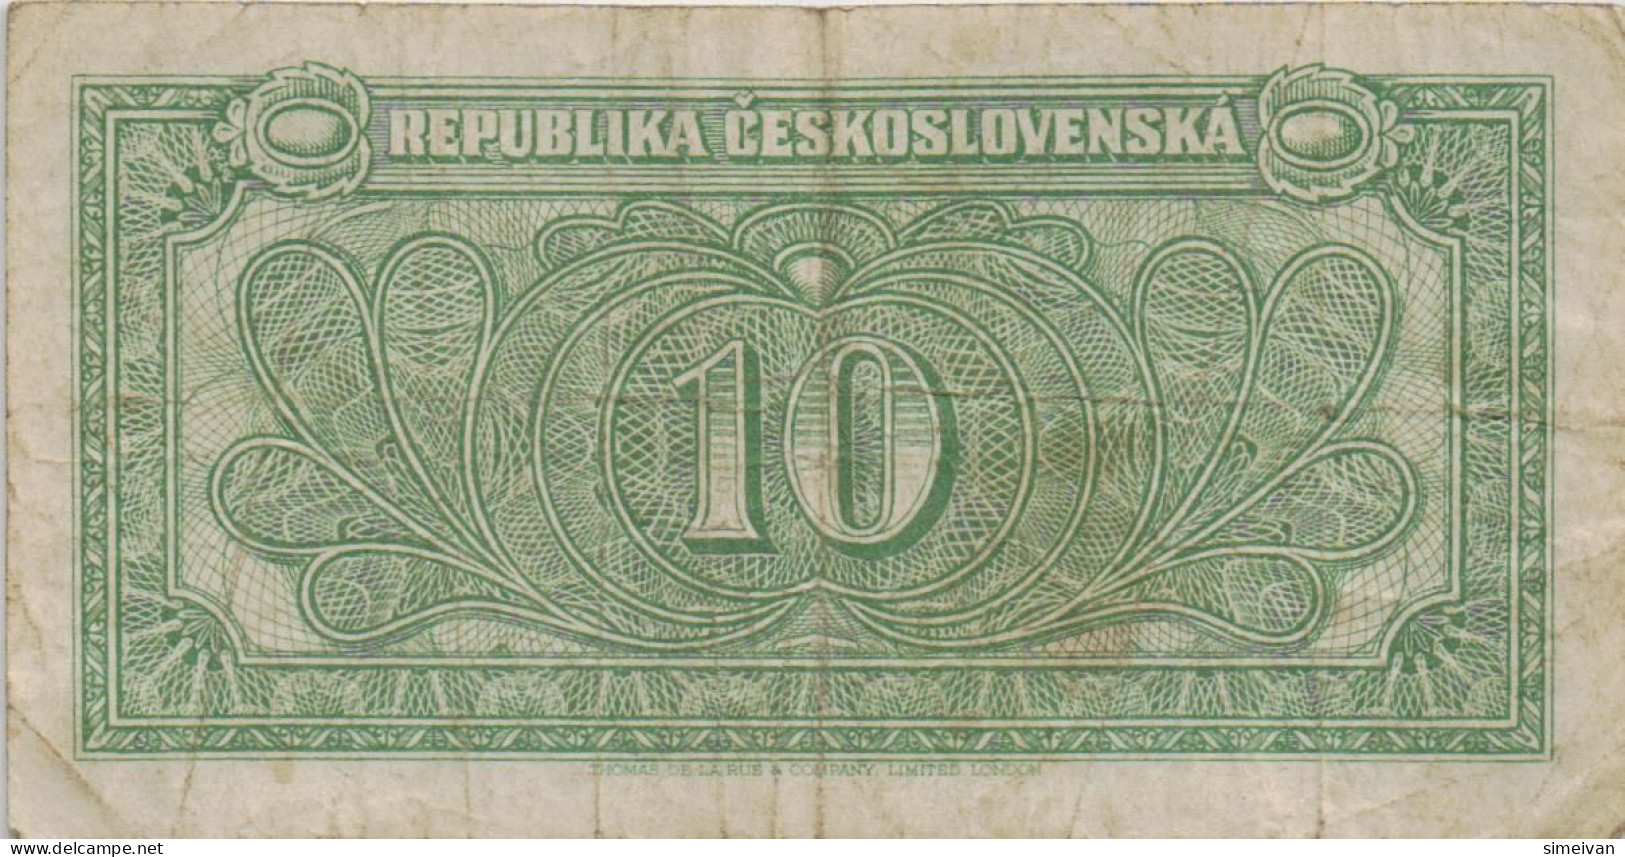 Czechoslovakia 10 Korun ND (1945) P-60a Banknote Europe Currency Tchécoslovaquie Tschechoslowakei #5226 - Checoslovaquia